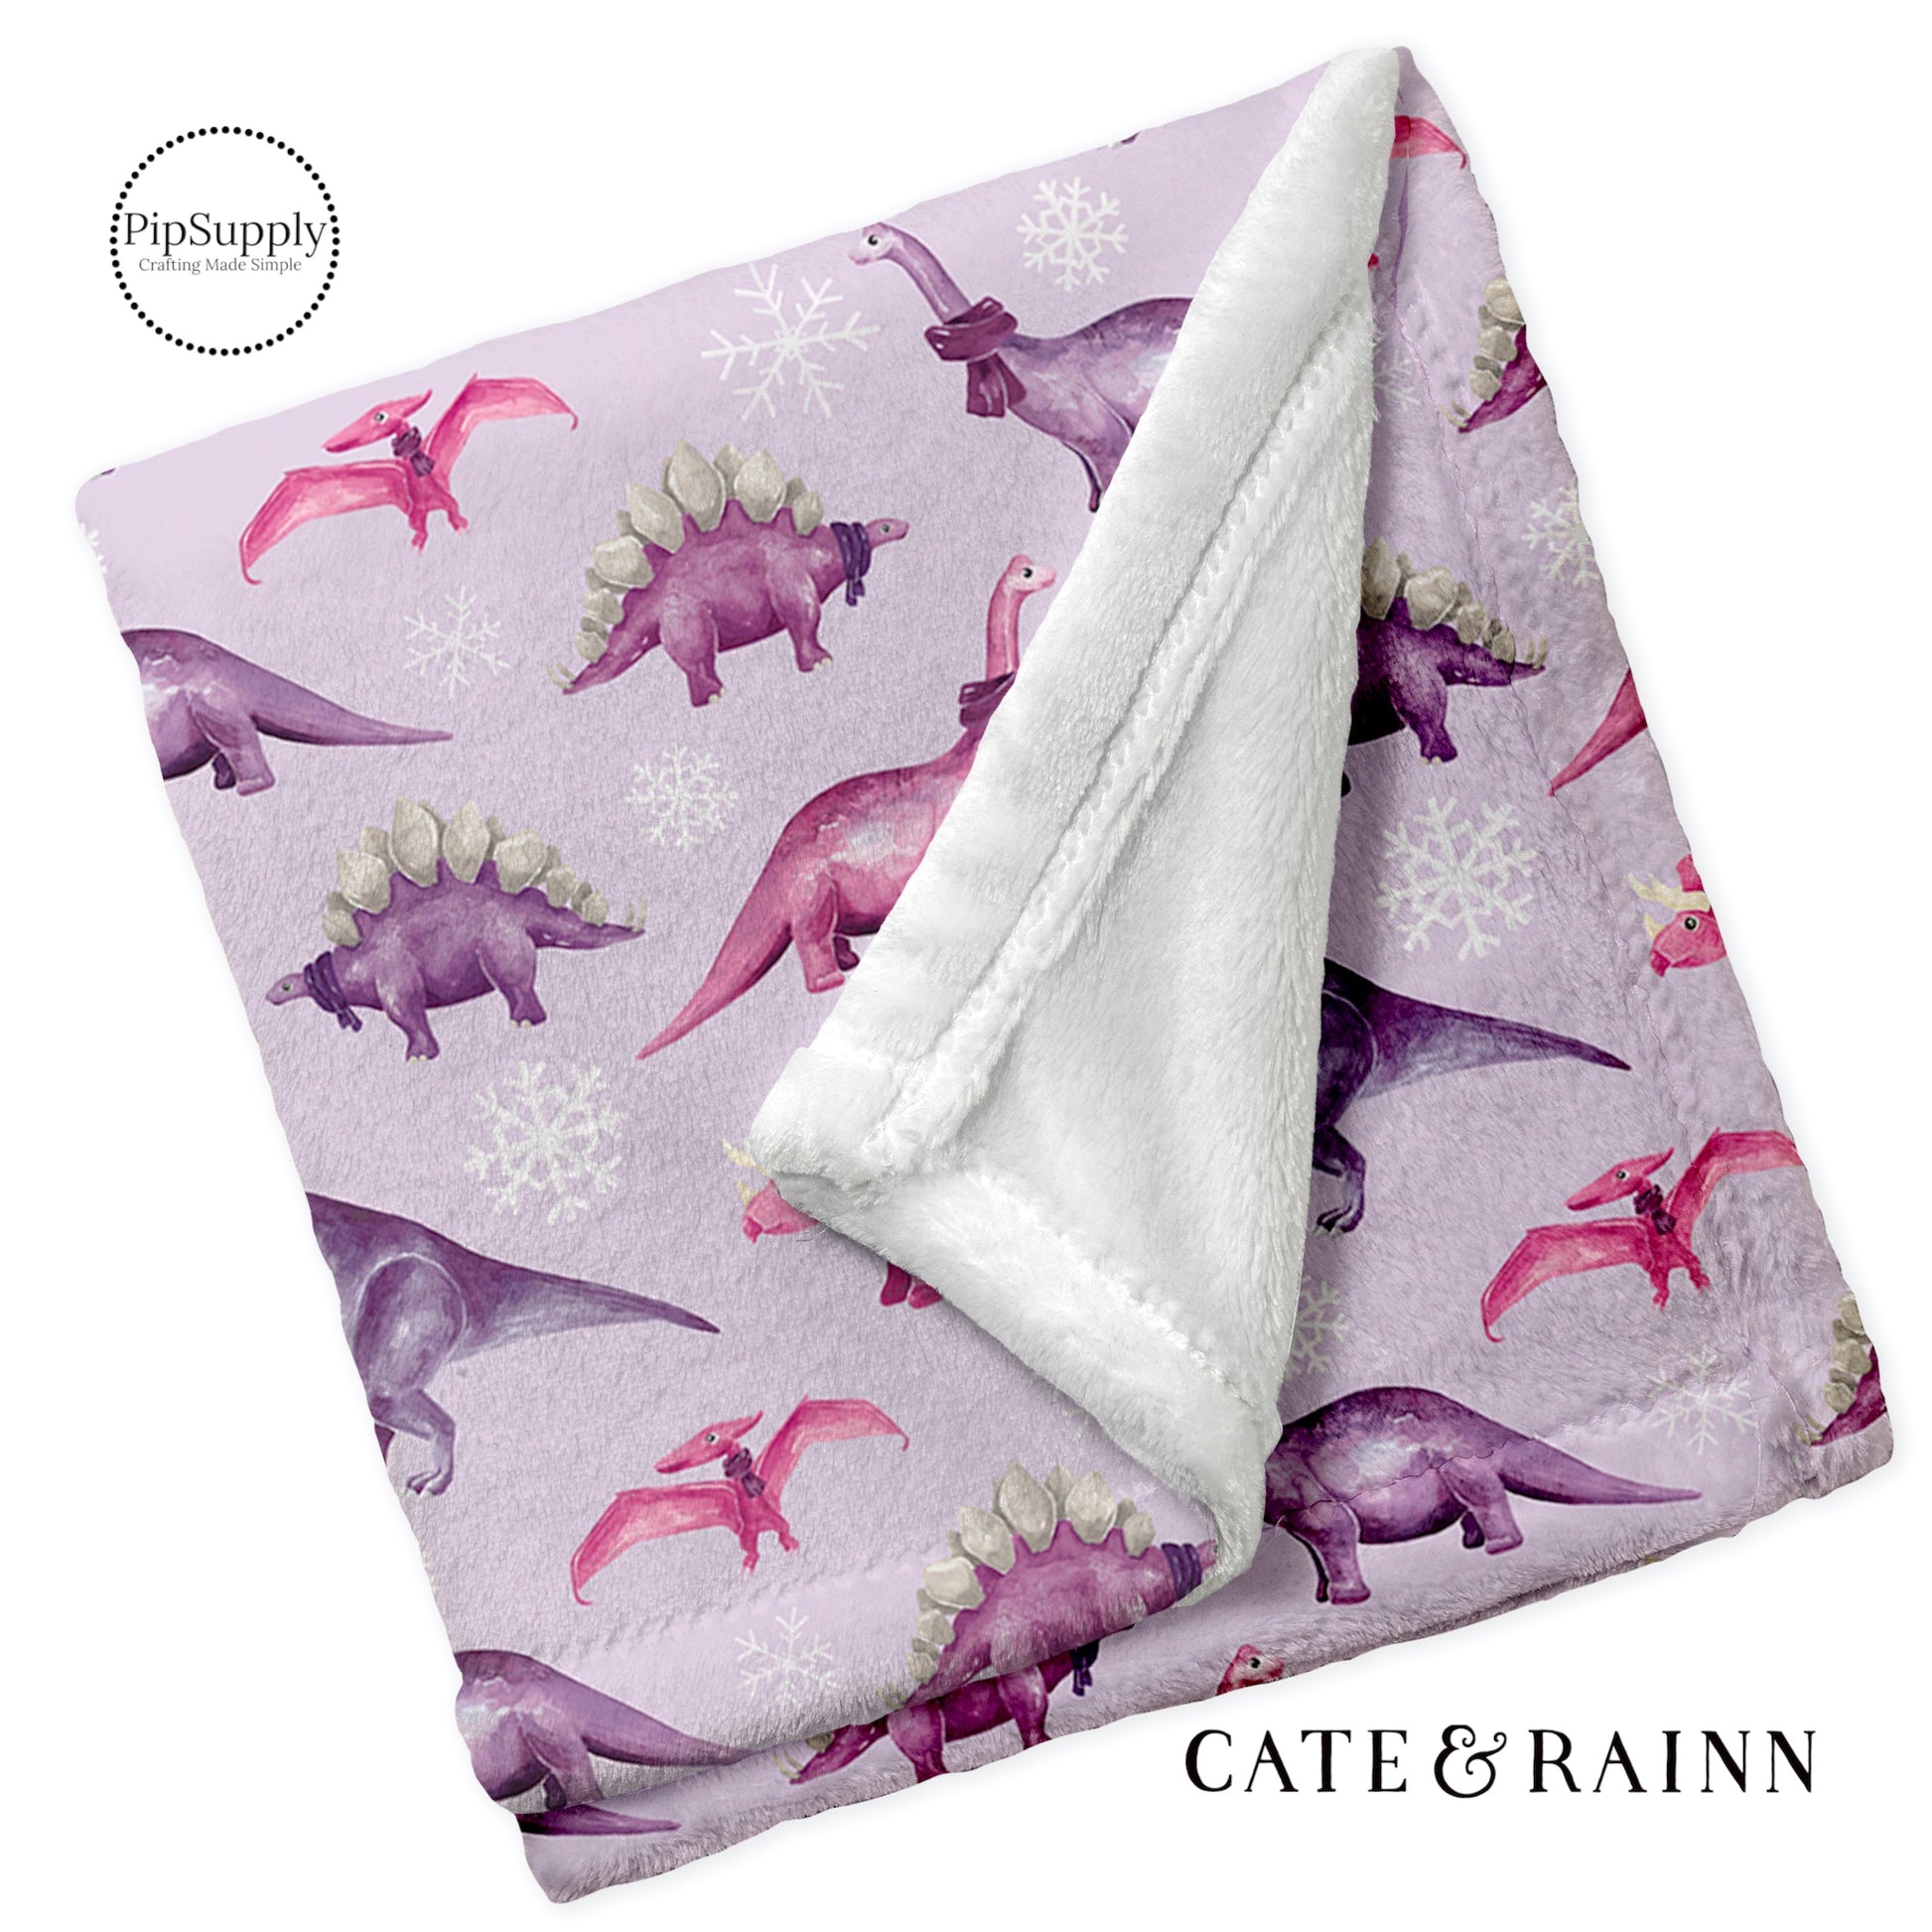 Custom Printed fleece blanket. Purple dinosaur and snowflake patterned soft folded minky fur blanket.